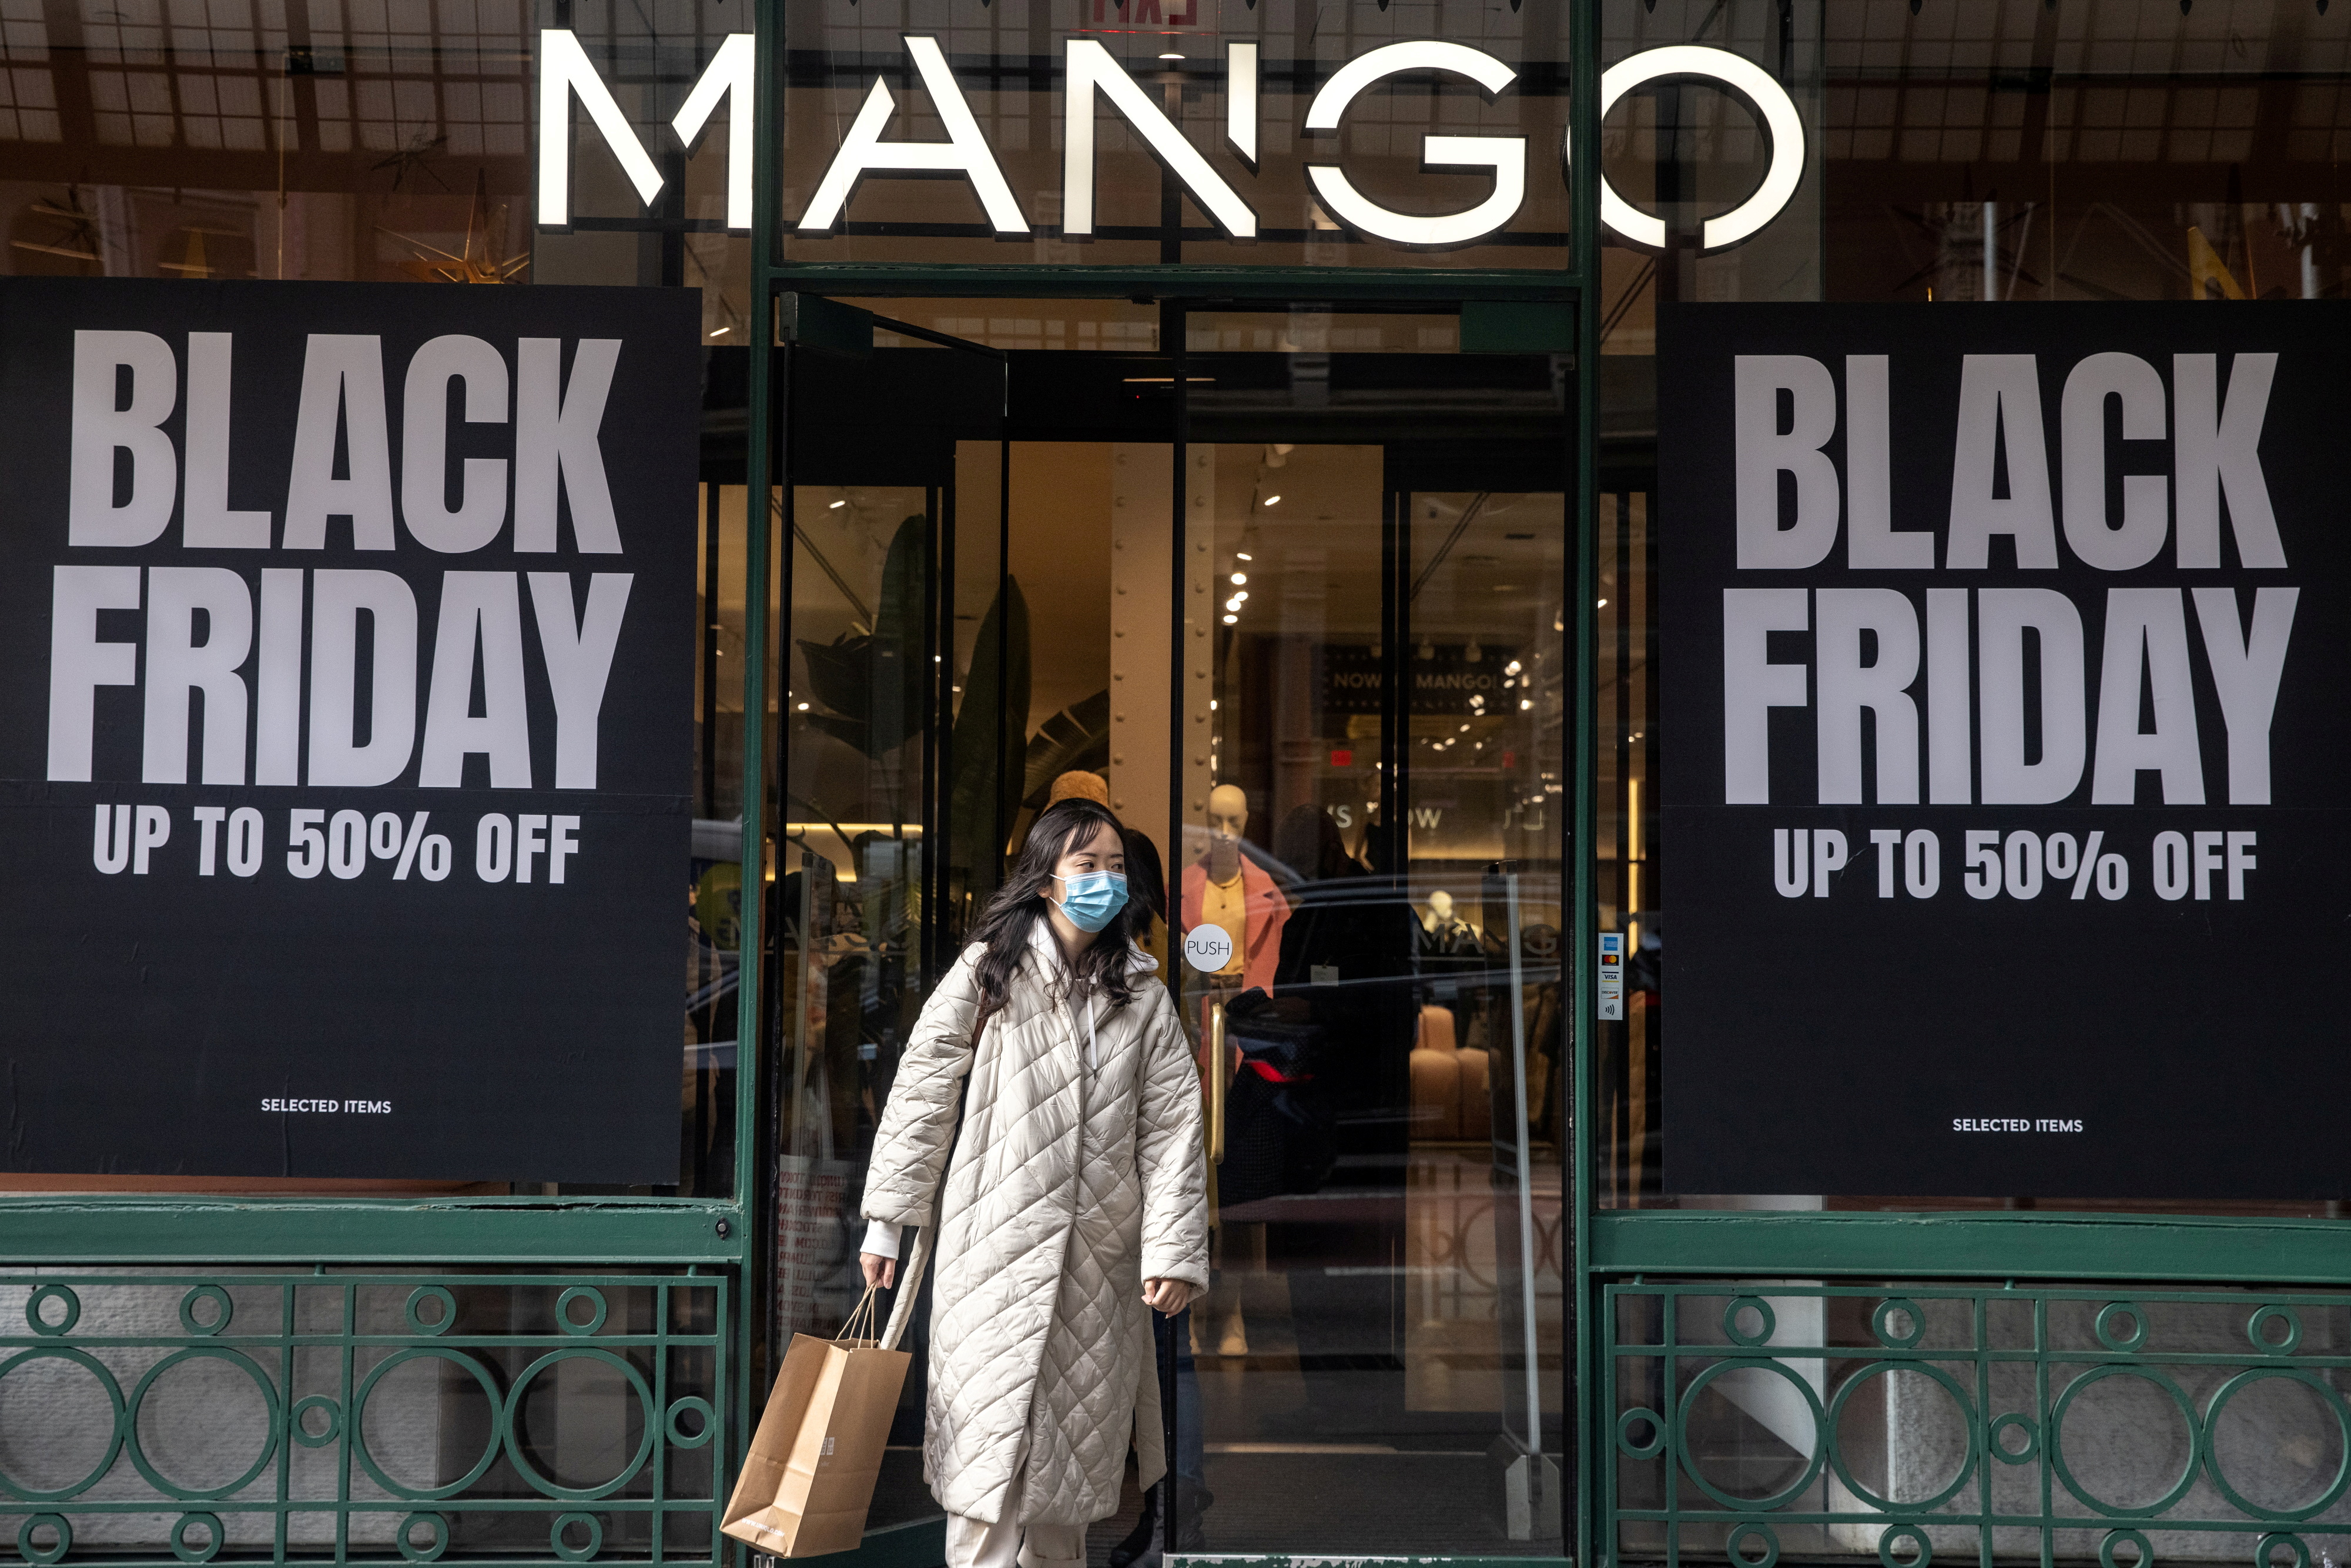 Black Friday shopping in New York City